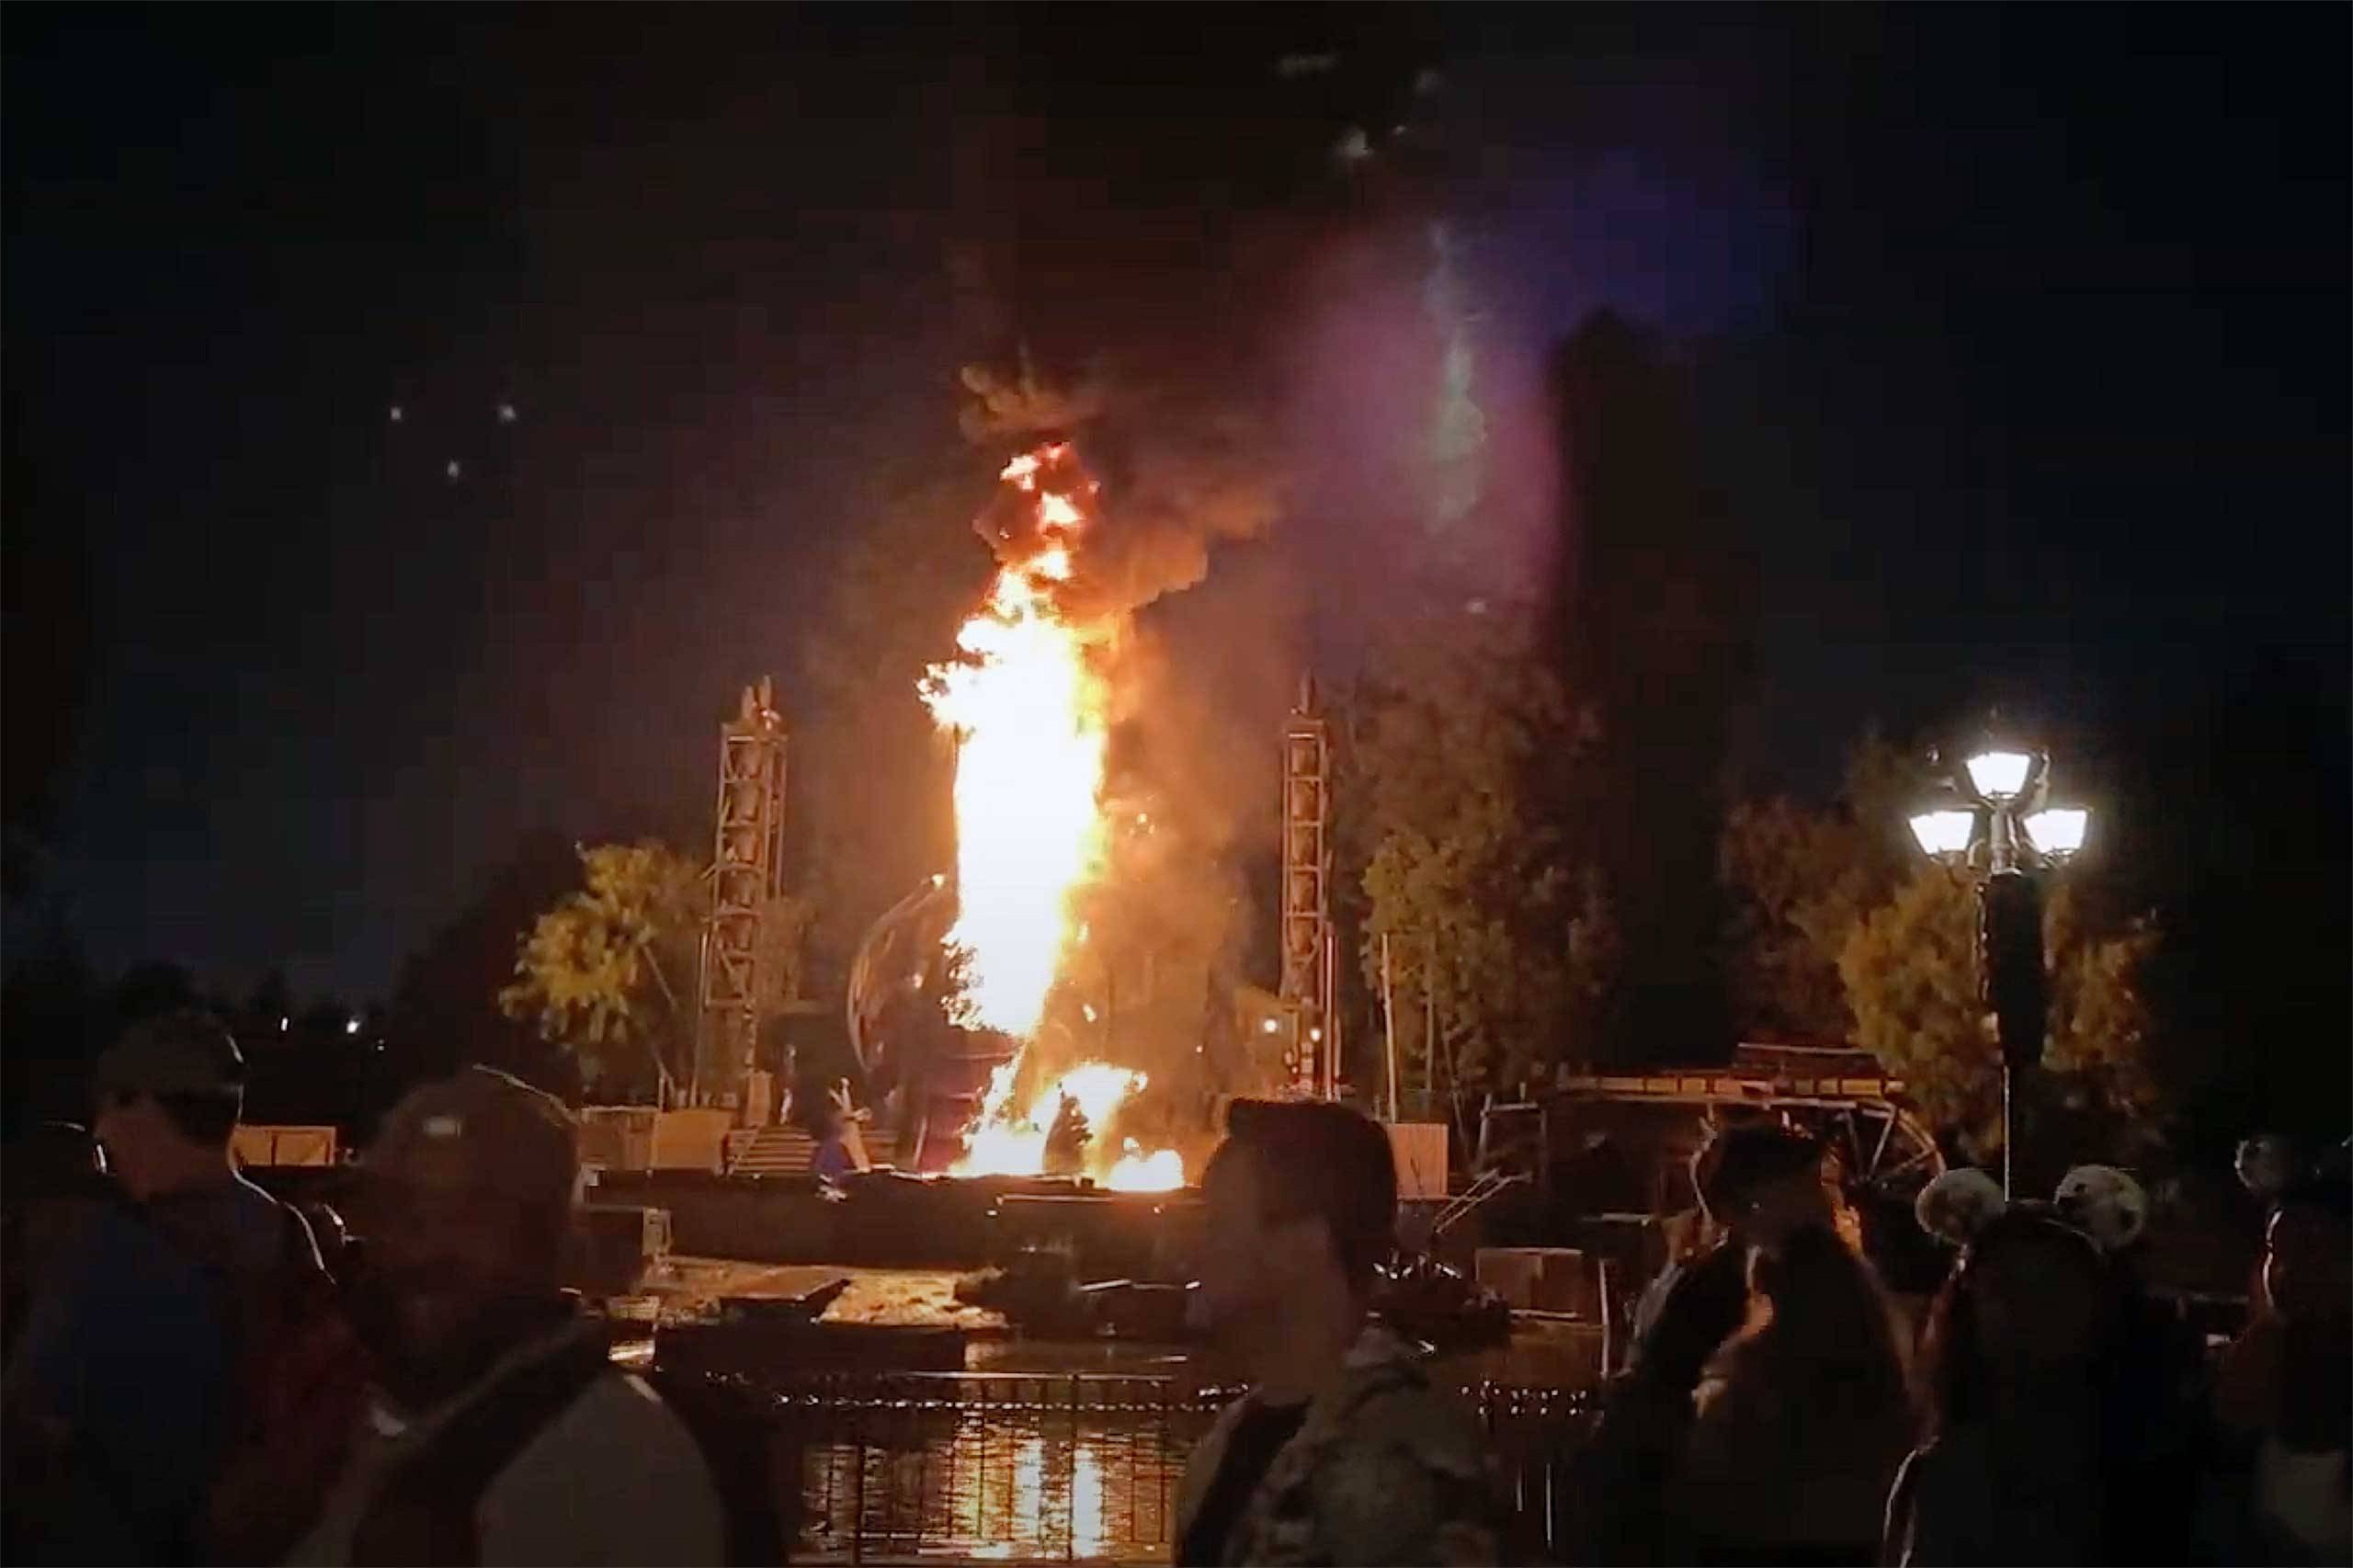 Dragon at Disneyland's Fantasmic! destroyed by massive fire